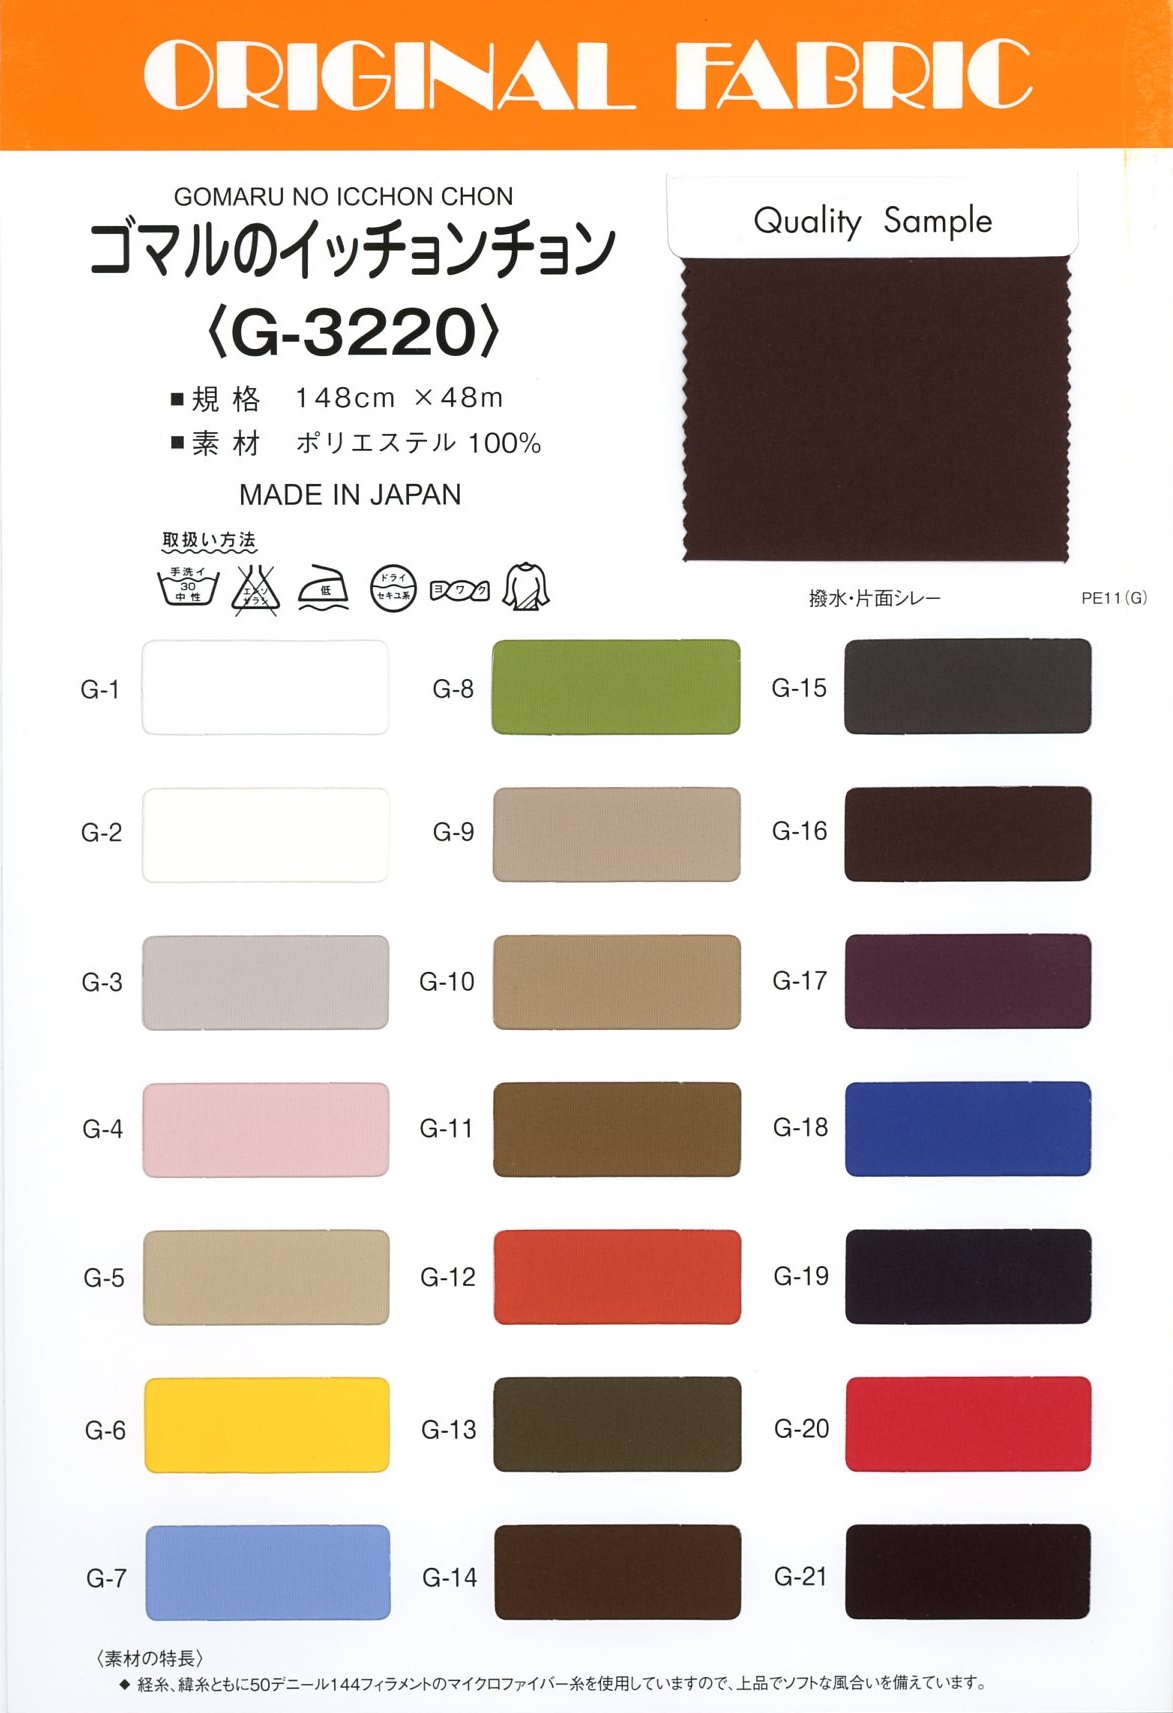 G-3220 Chonchon De Gomaru[Fabrica Textil] Masuda